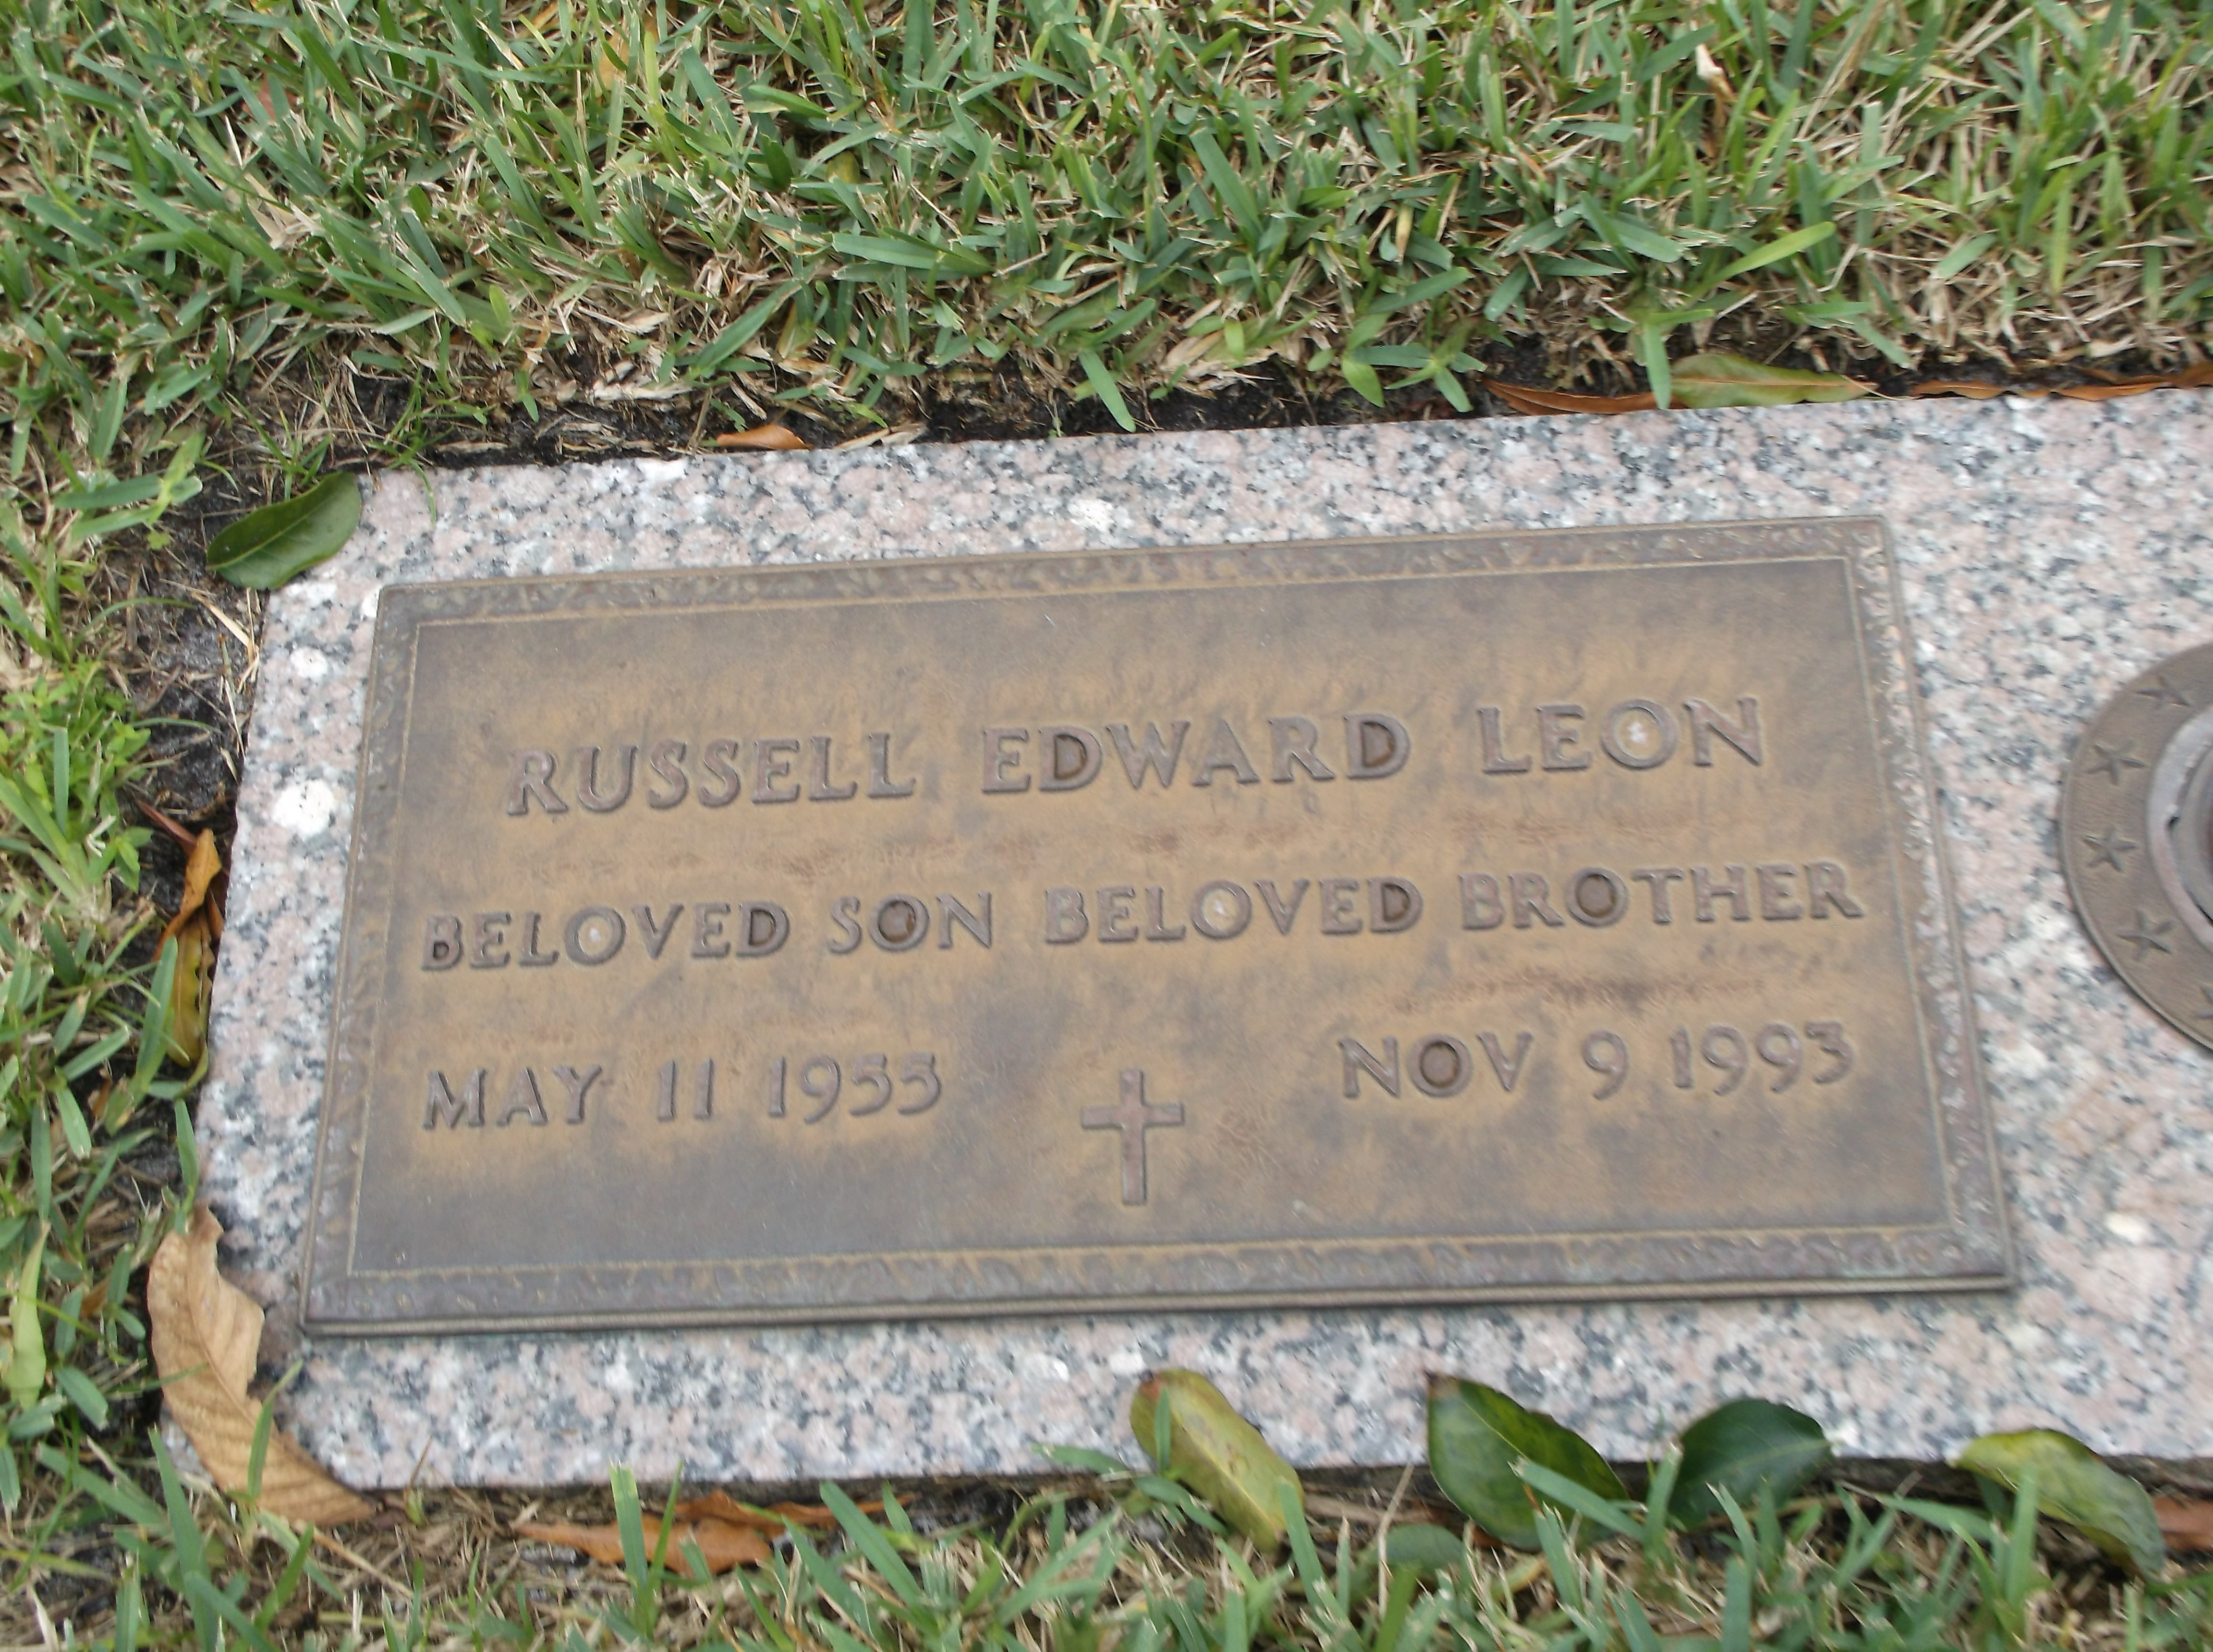 Russell Edward Leon